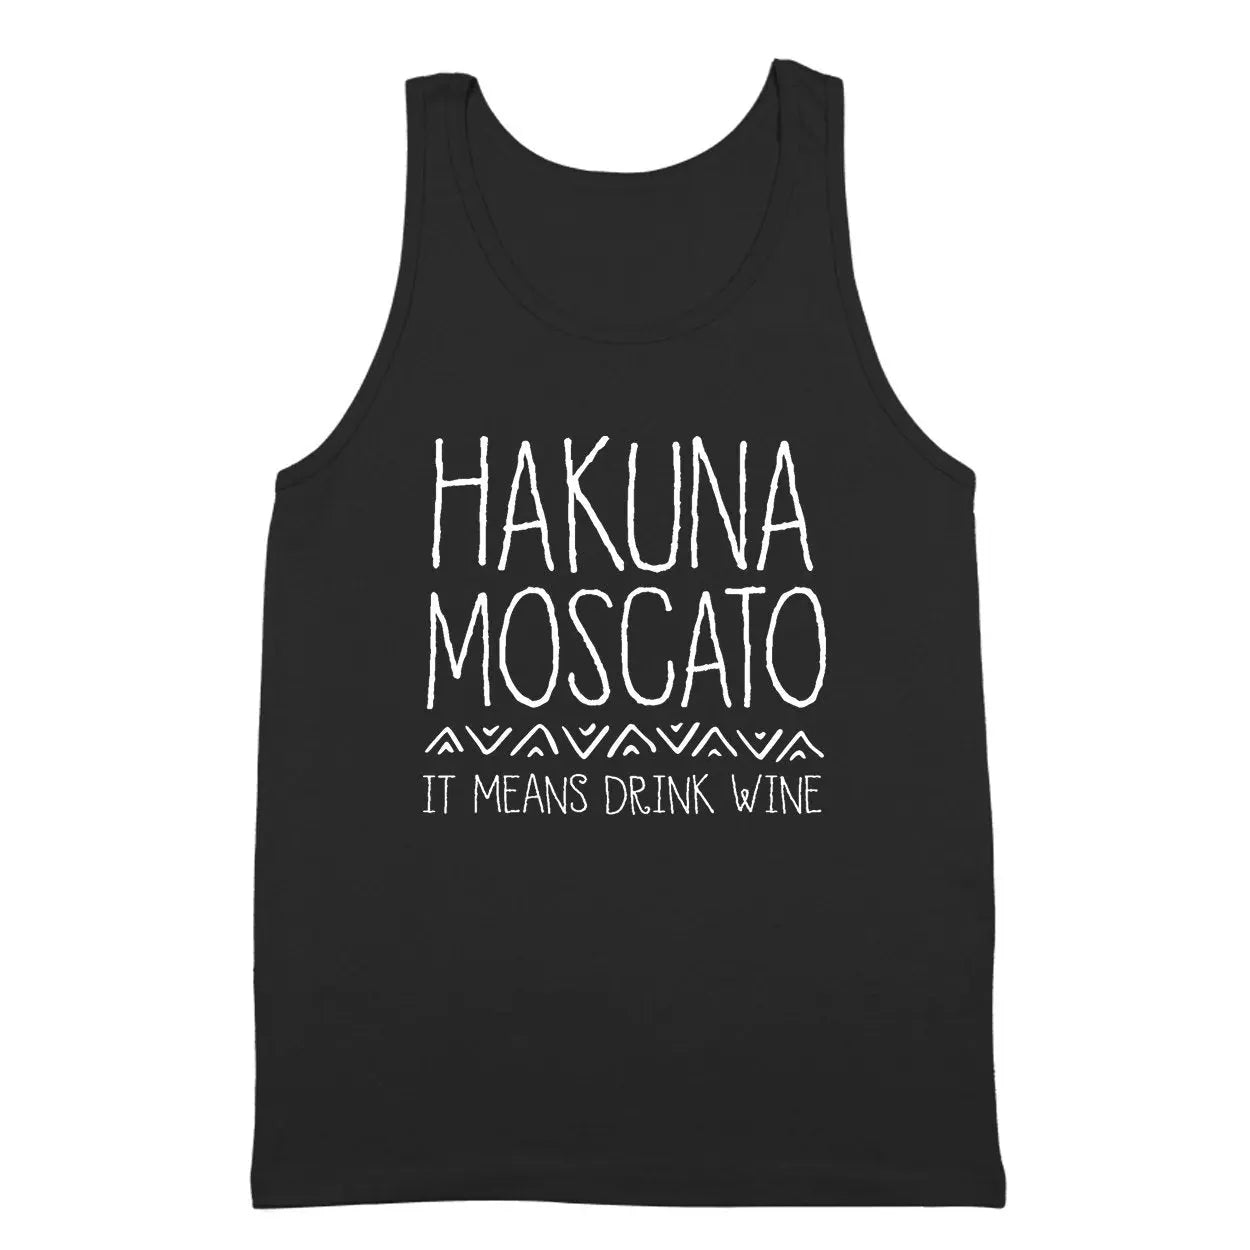 Hakuna Moscato It Means Drink Wine Tshirt - Donkey Tees